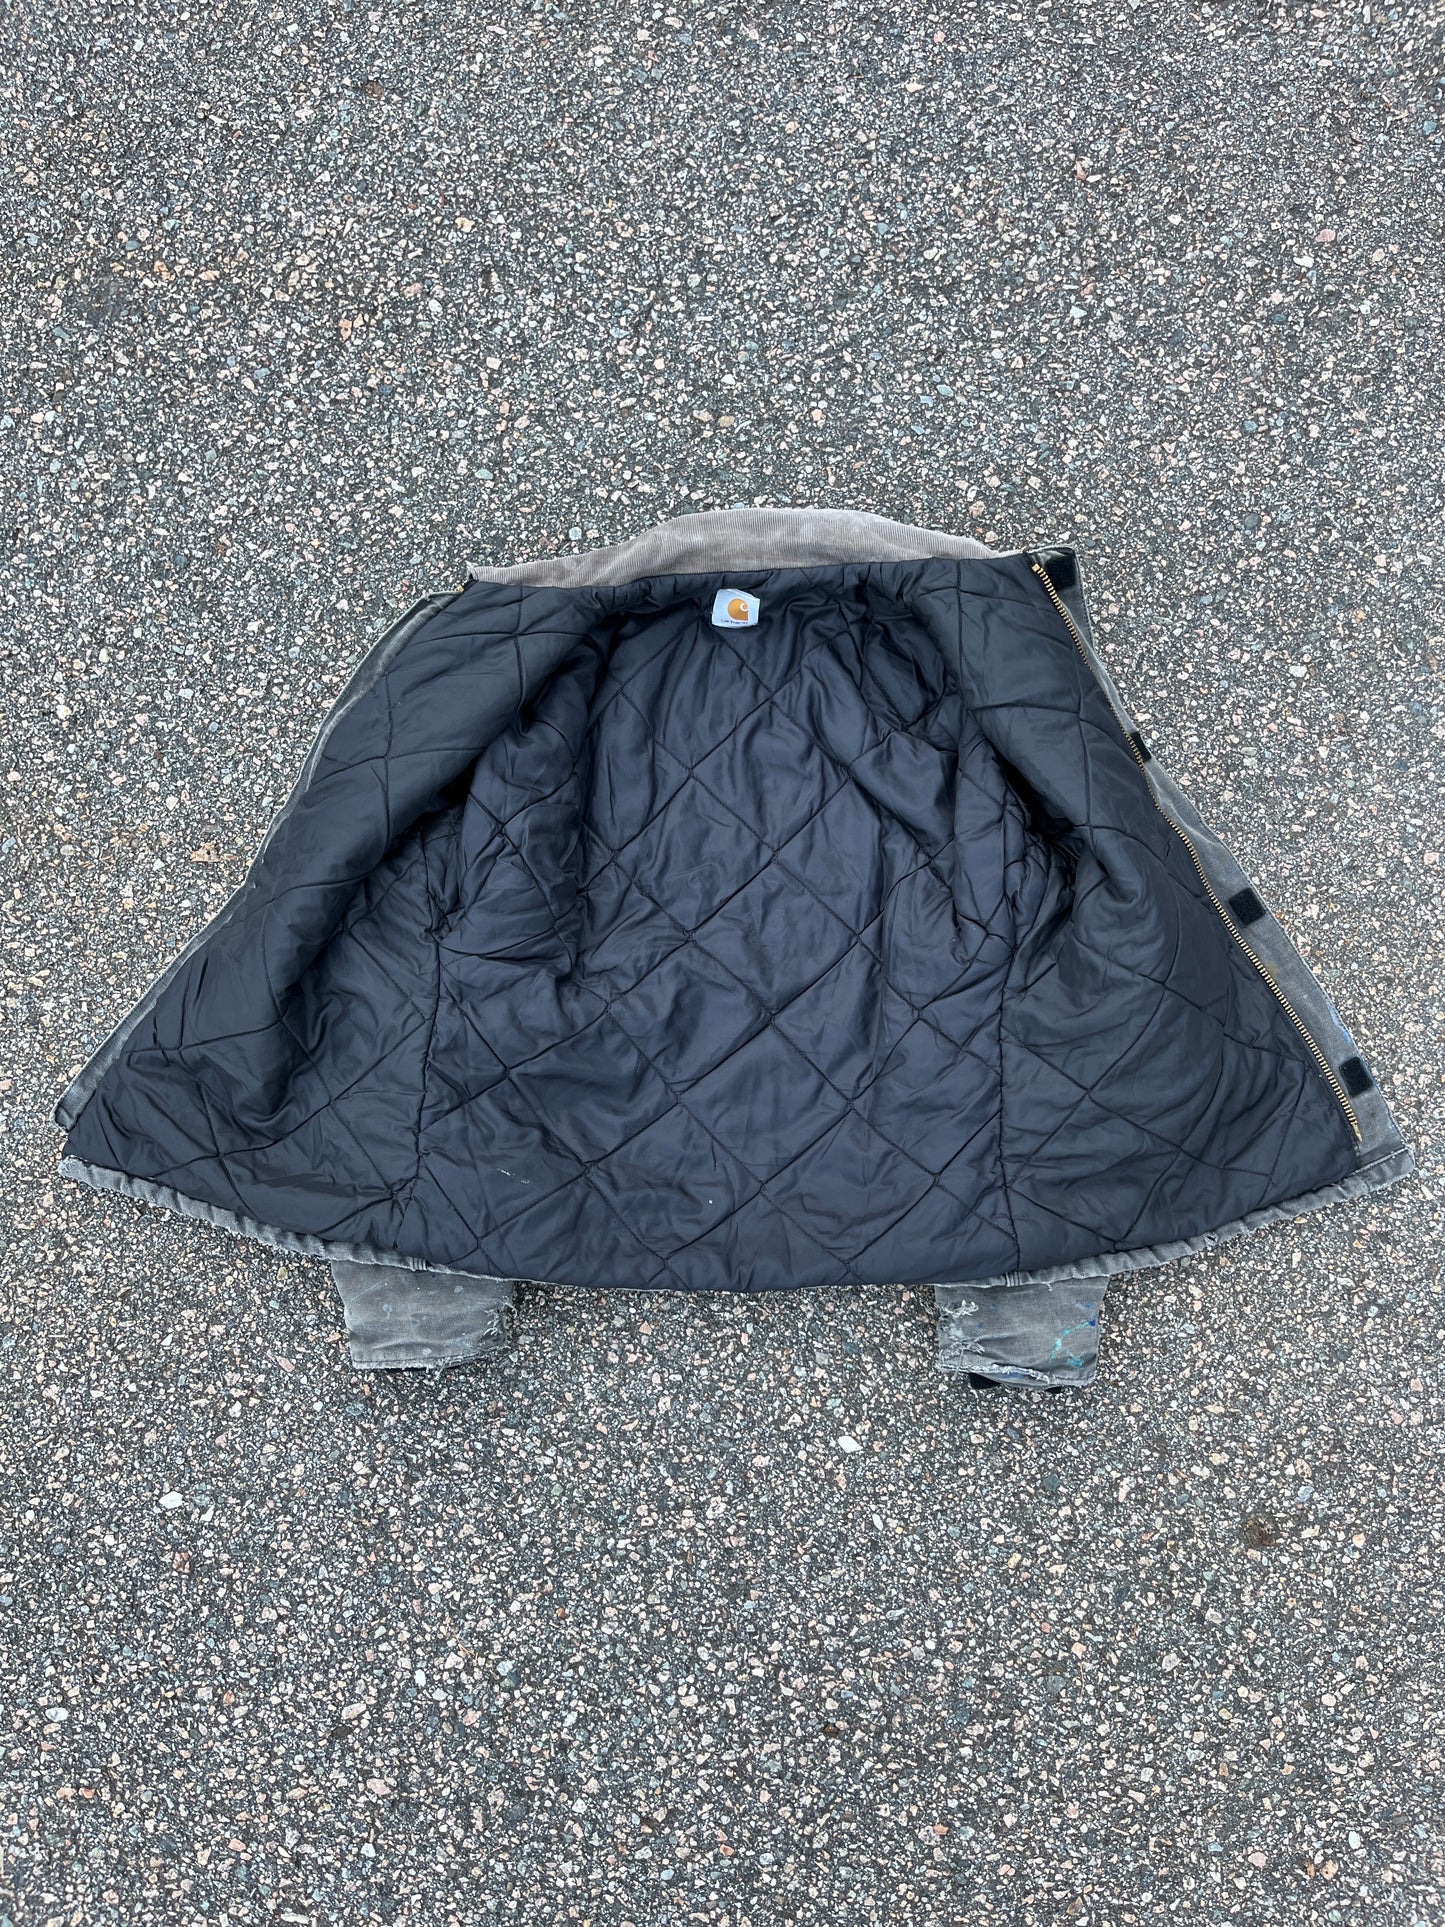 Faded n Painted Black Carhartt Arctic Jacket - Medium